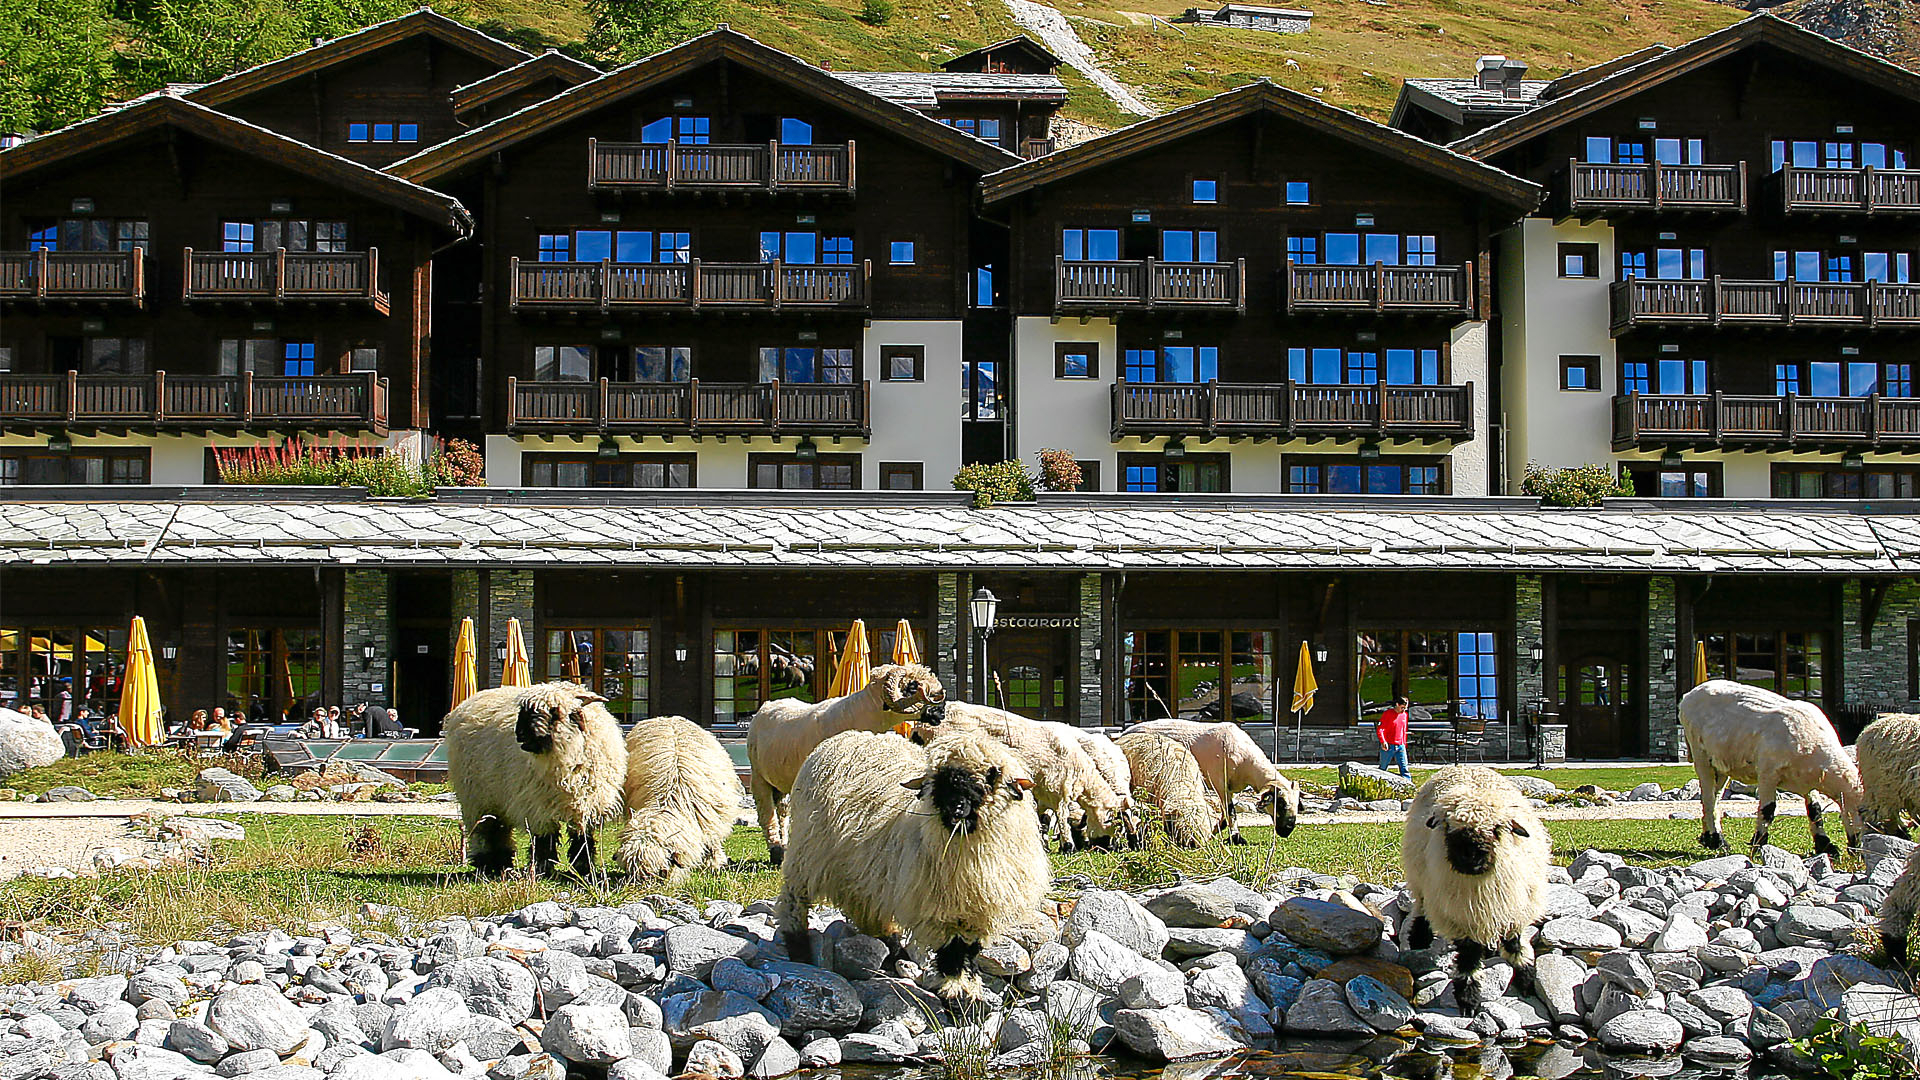 Riffelalp度假村2'222m Zermatt - slide